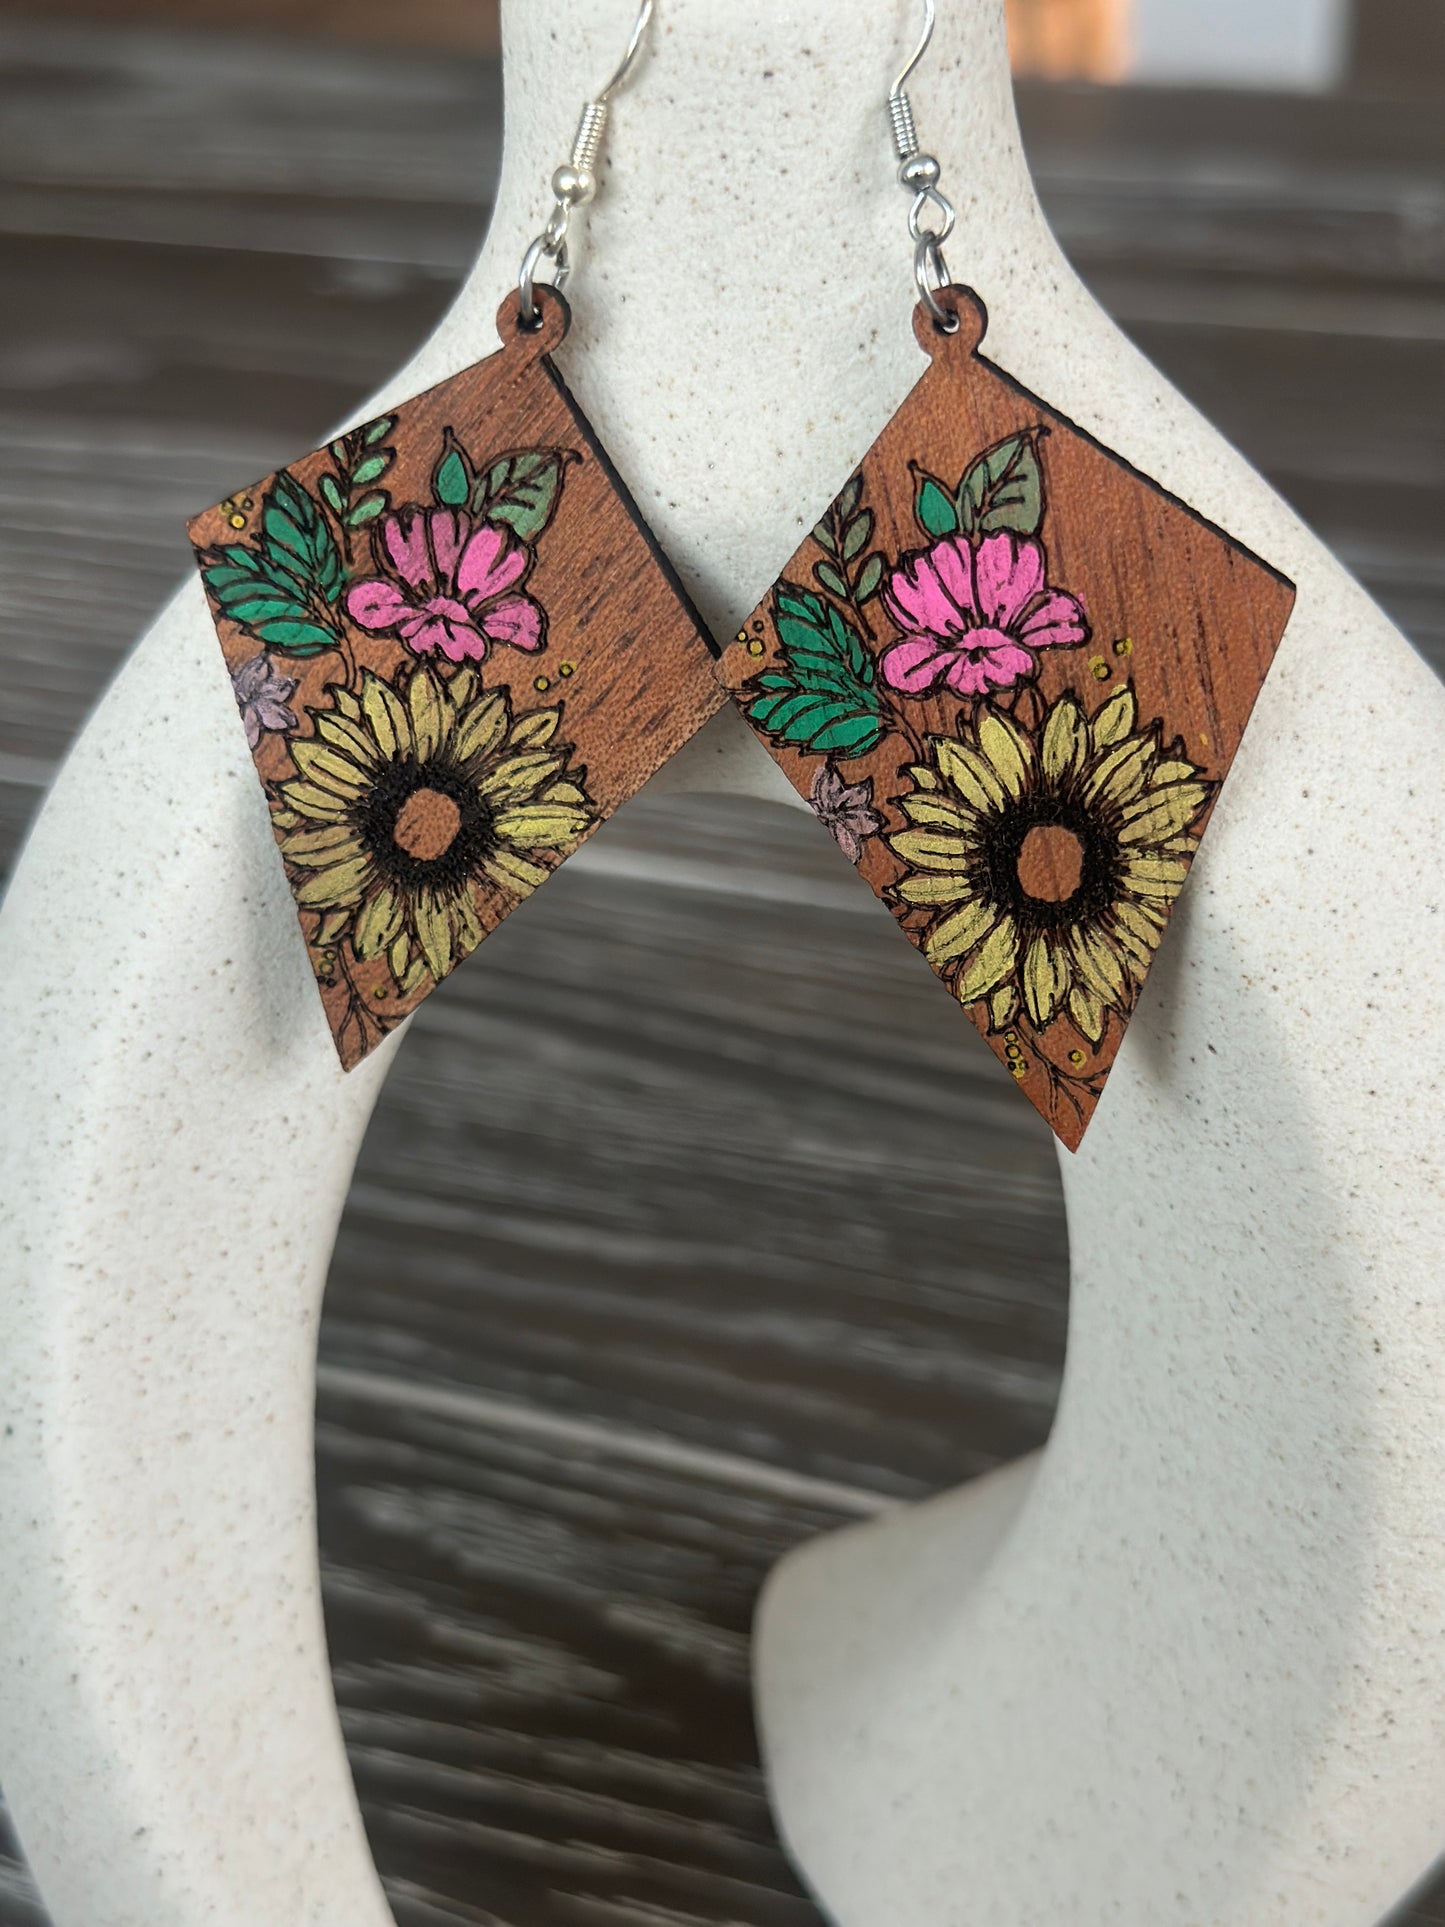 Wooden Sunflower Hand Painted Earrings/Sunflower Earrings/Sunflower Jewelry